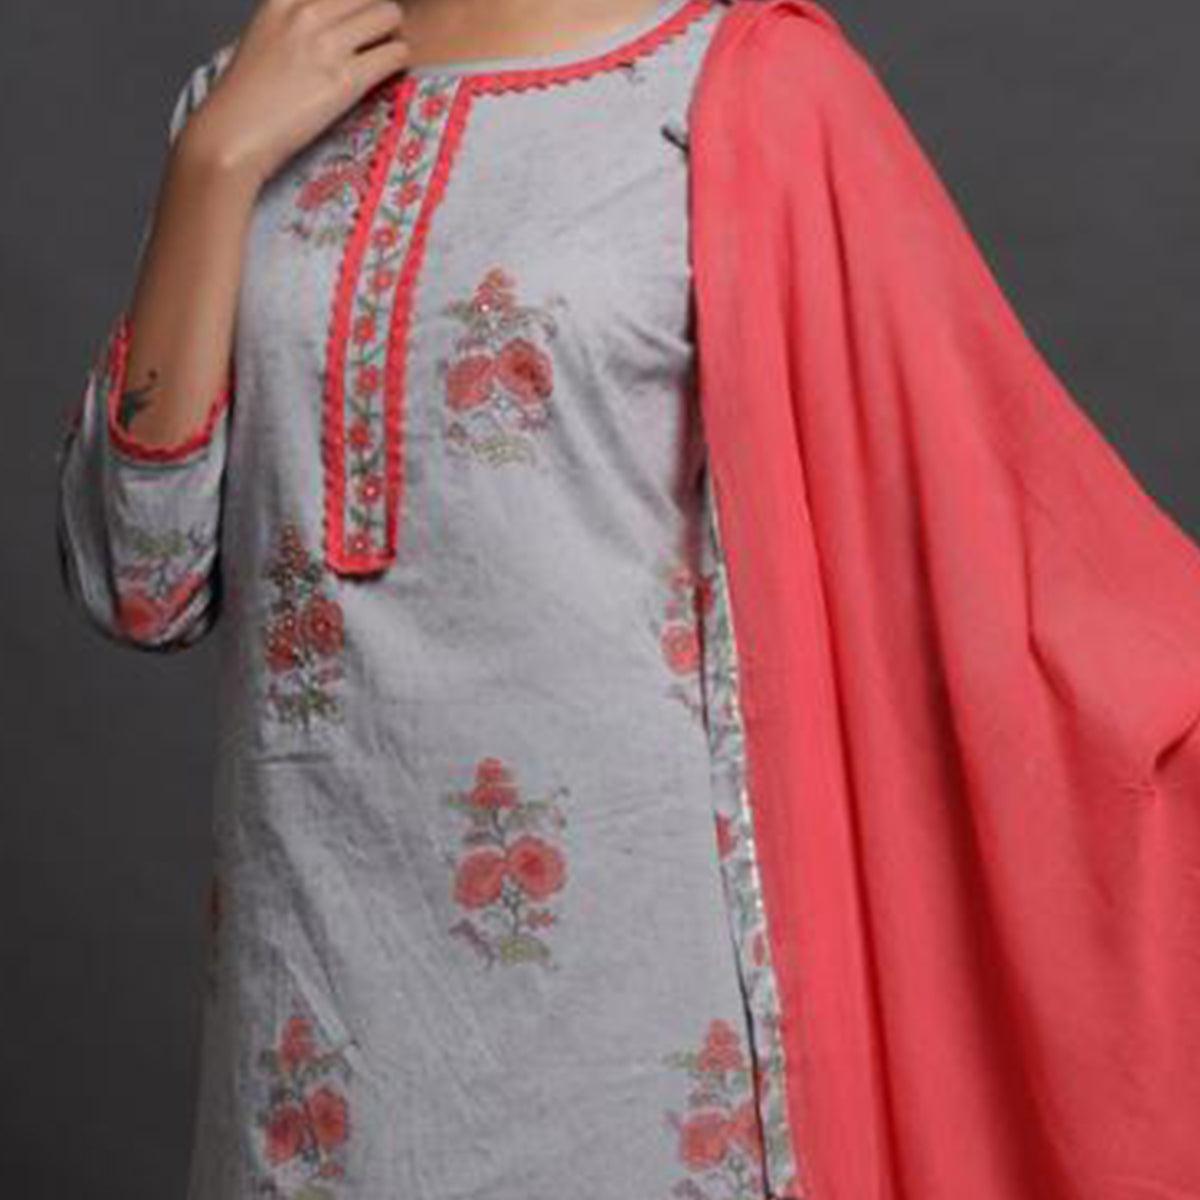 Aariya Designs - Grey Colored Casual Wear Floral Printed Cotton Kurti-Pant Set With Dupatta - Peachmode